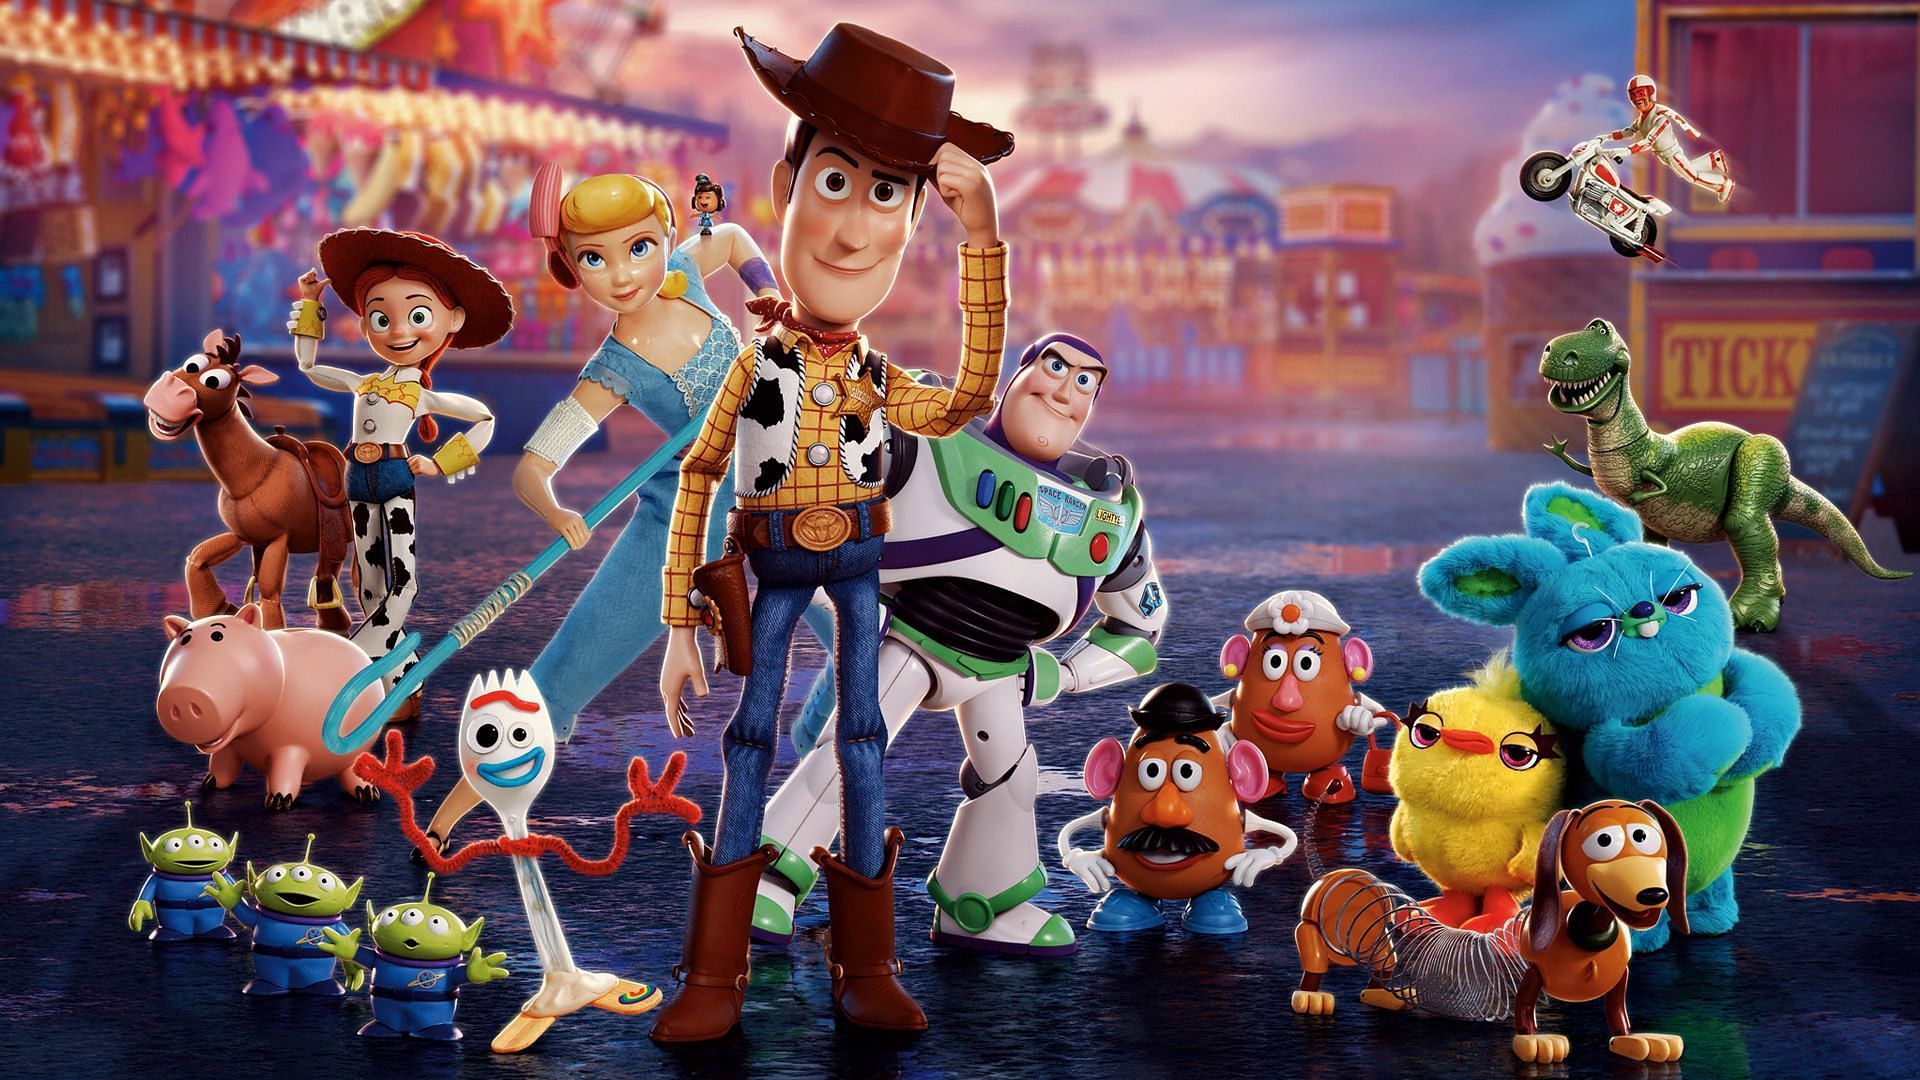 A promo image for Toy Story 4 (Image via Disney Pixar and IMDb)